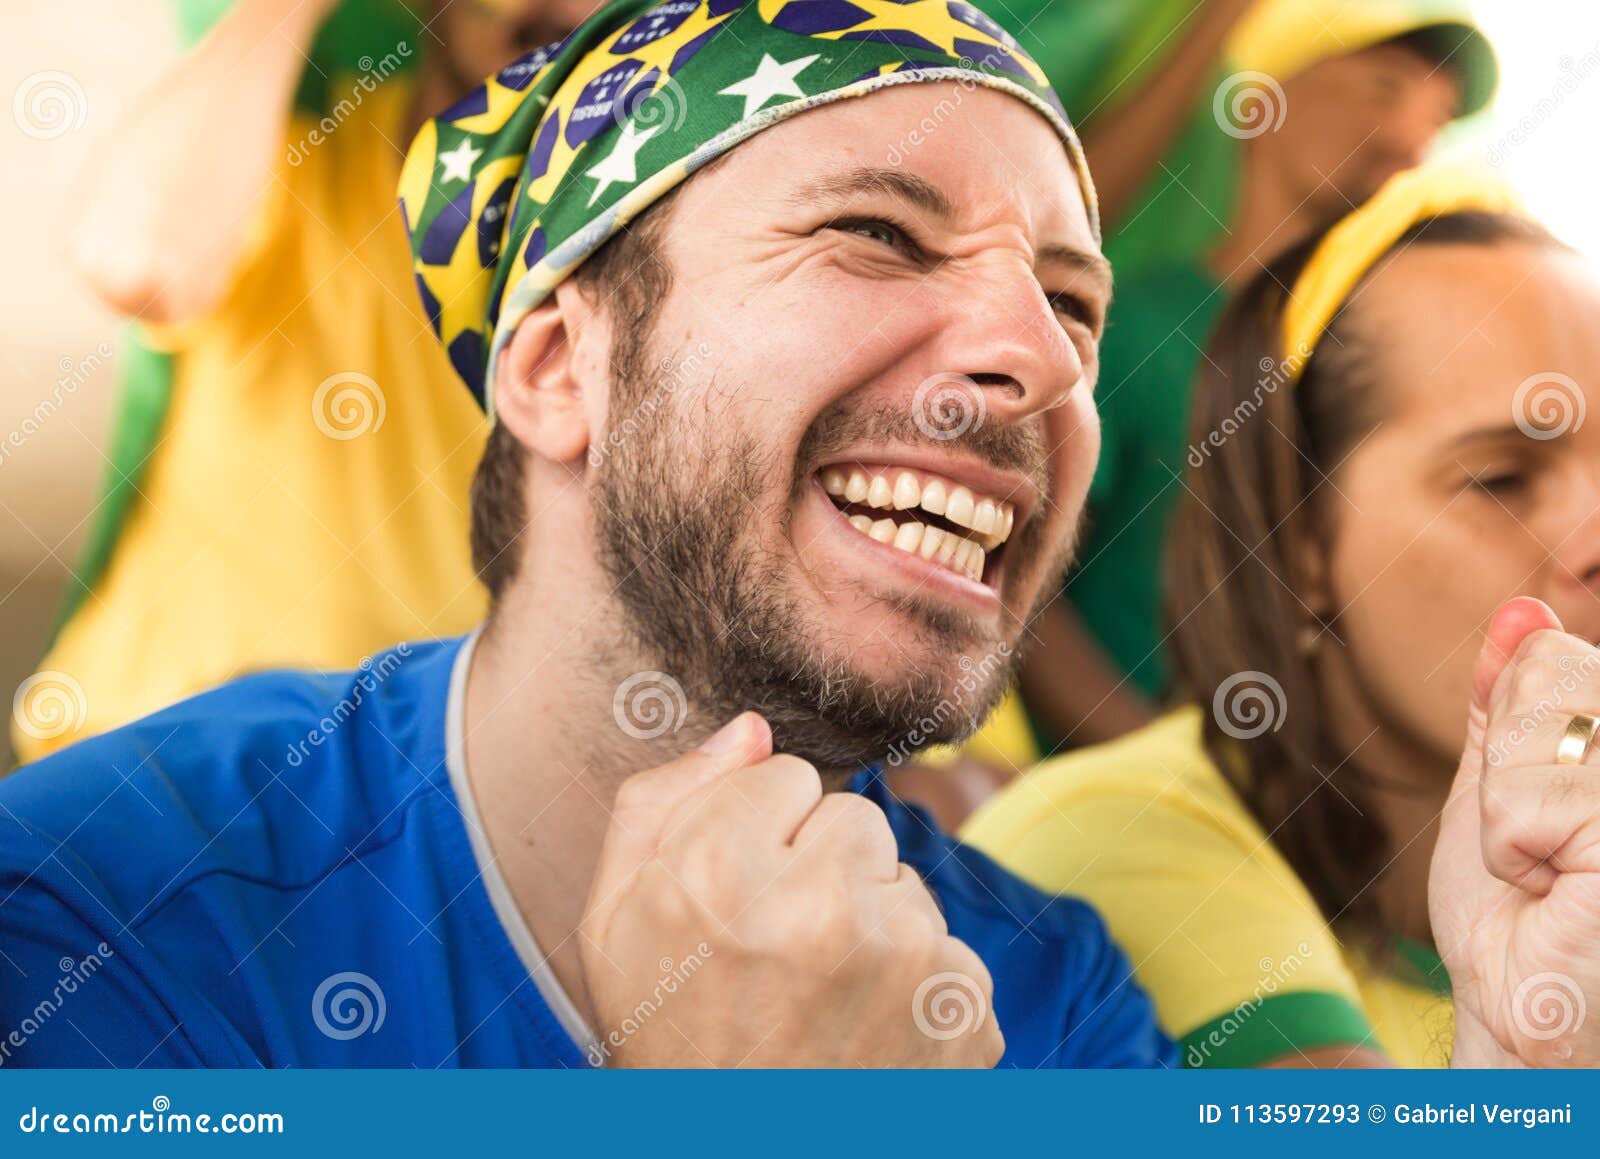 brazilian supporters at stadium bleachers.